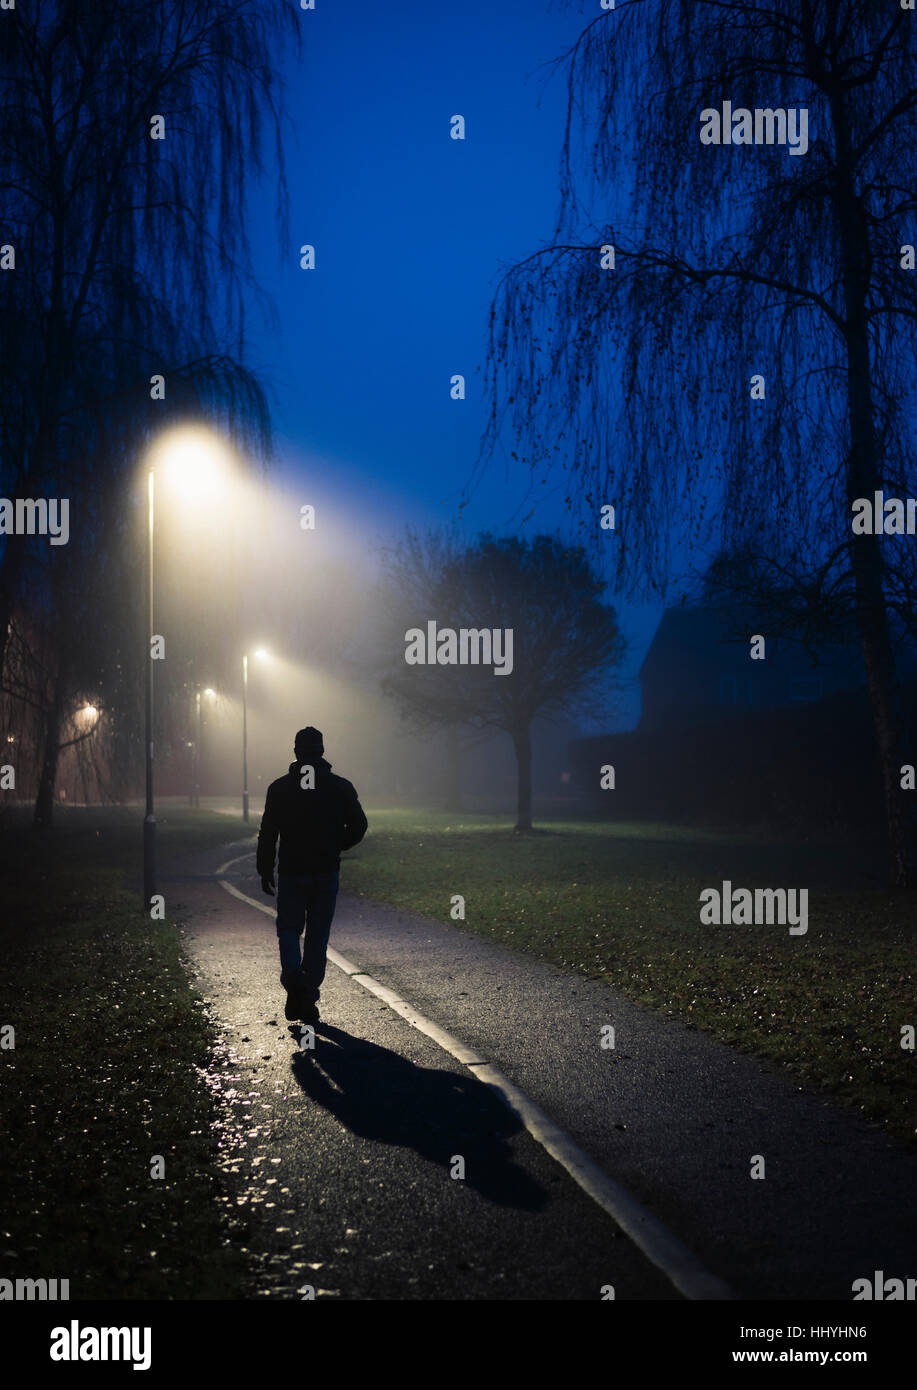 A lone figure walking along a path lit by streetlights Stock Photo